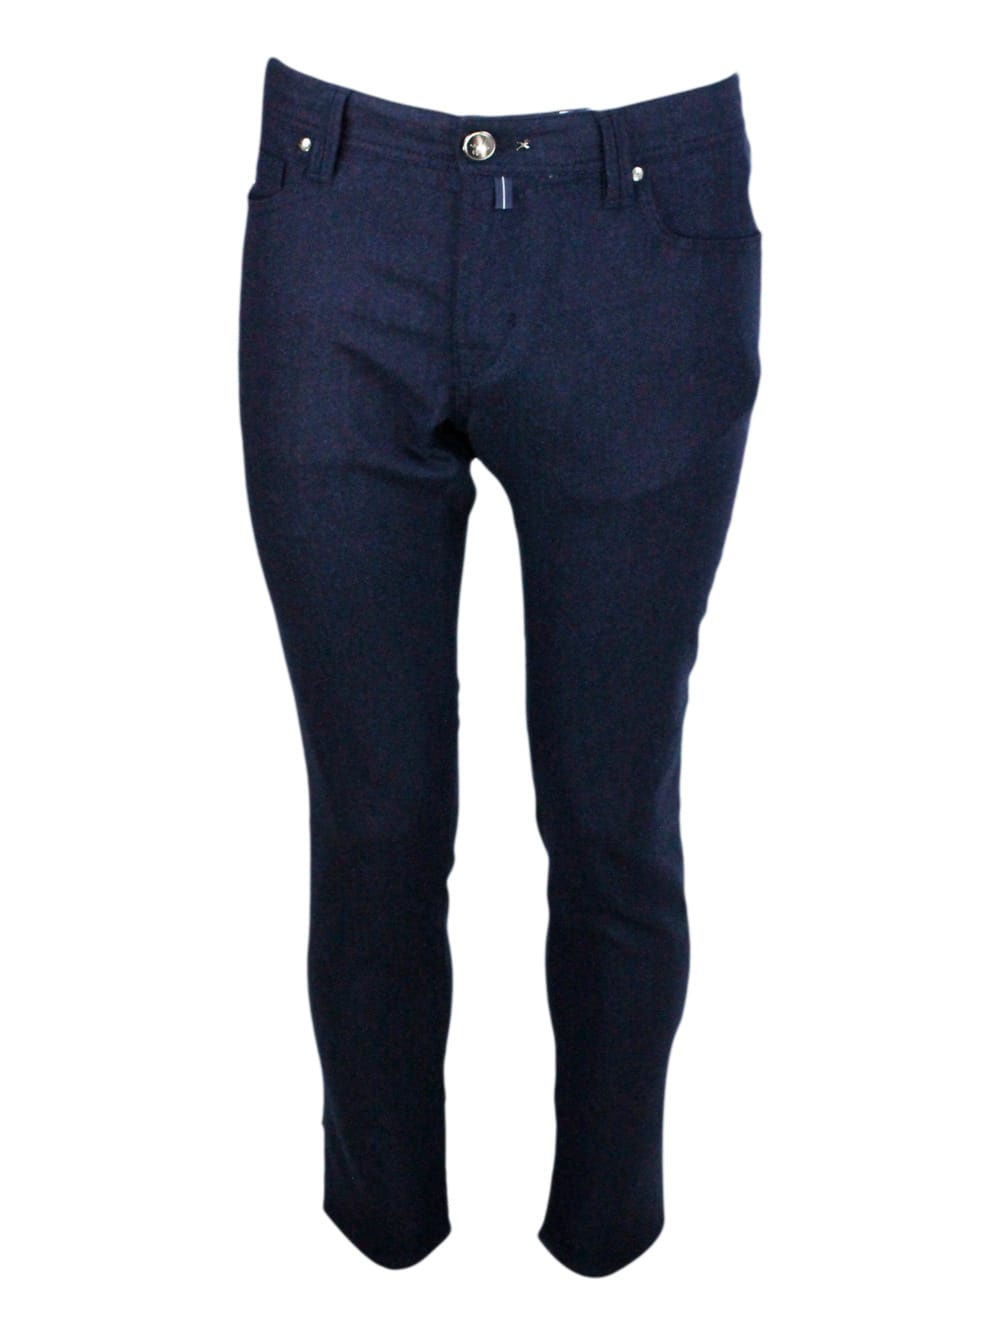 Sartoria Tramarossa Leonardo Zip Trousers In Fine Semi-carded Wool Flannel By Vitale Barberis Canonico With 5 Pockets Wi In Blu